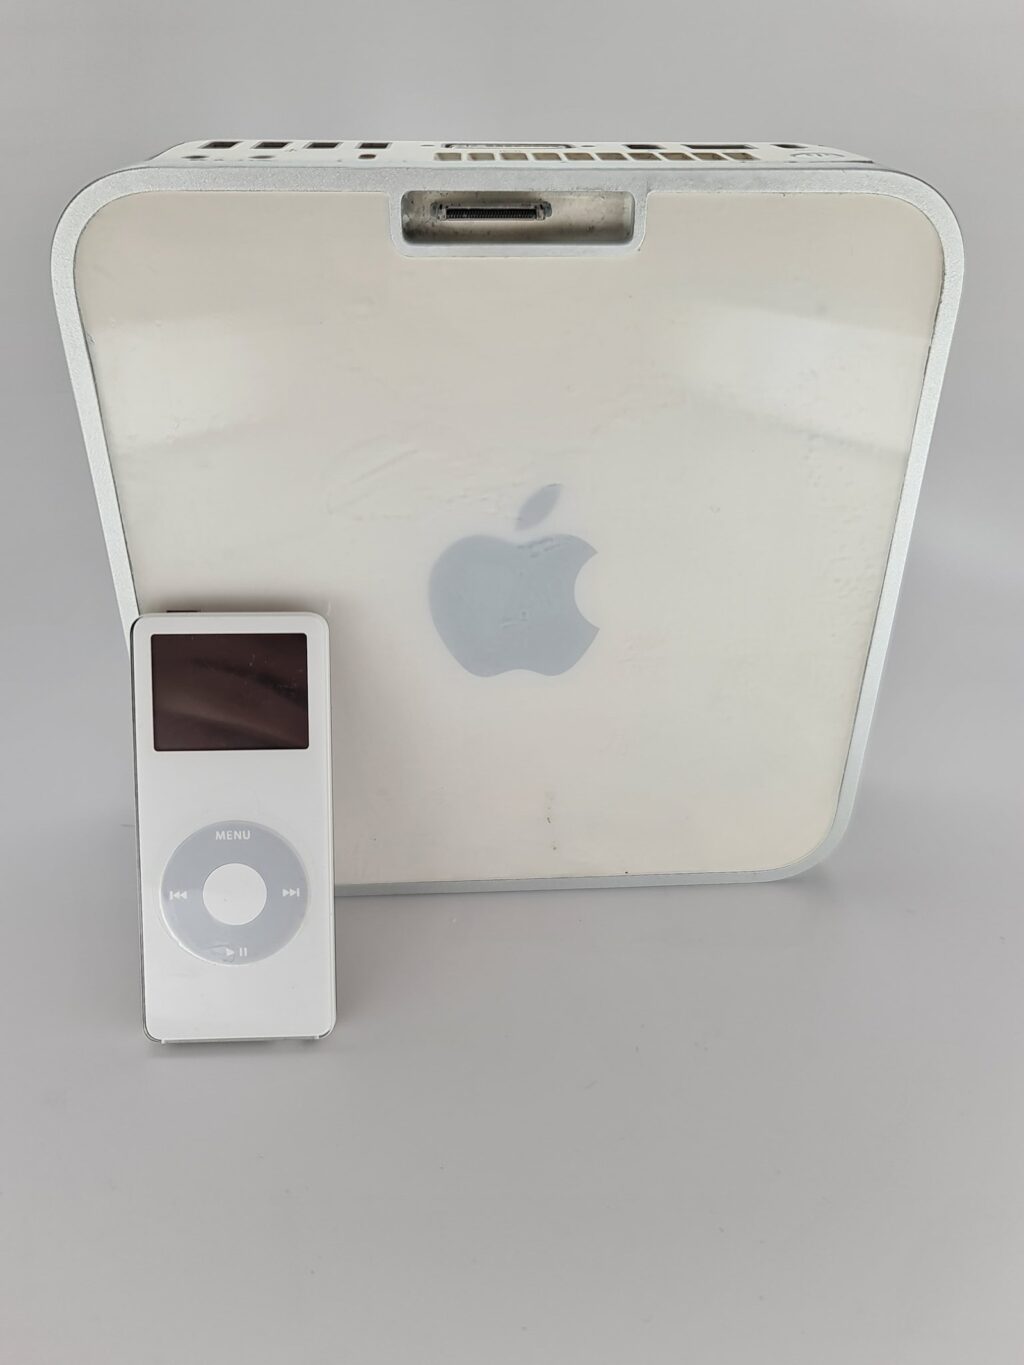 Exposure of EVT Mac Mini Prototype, with iPod dock